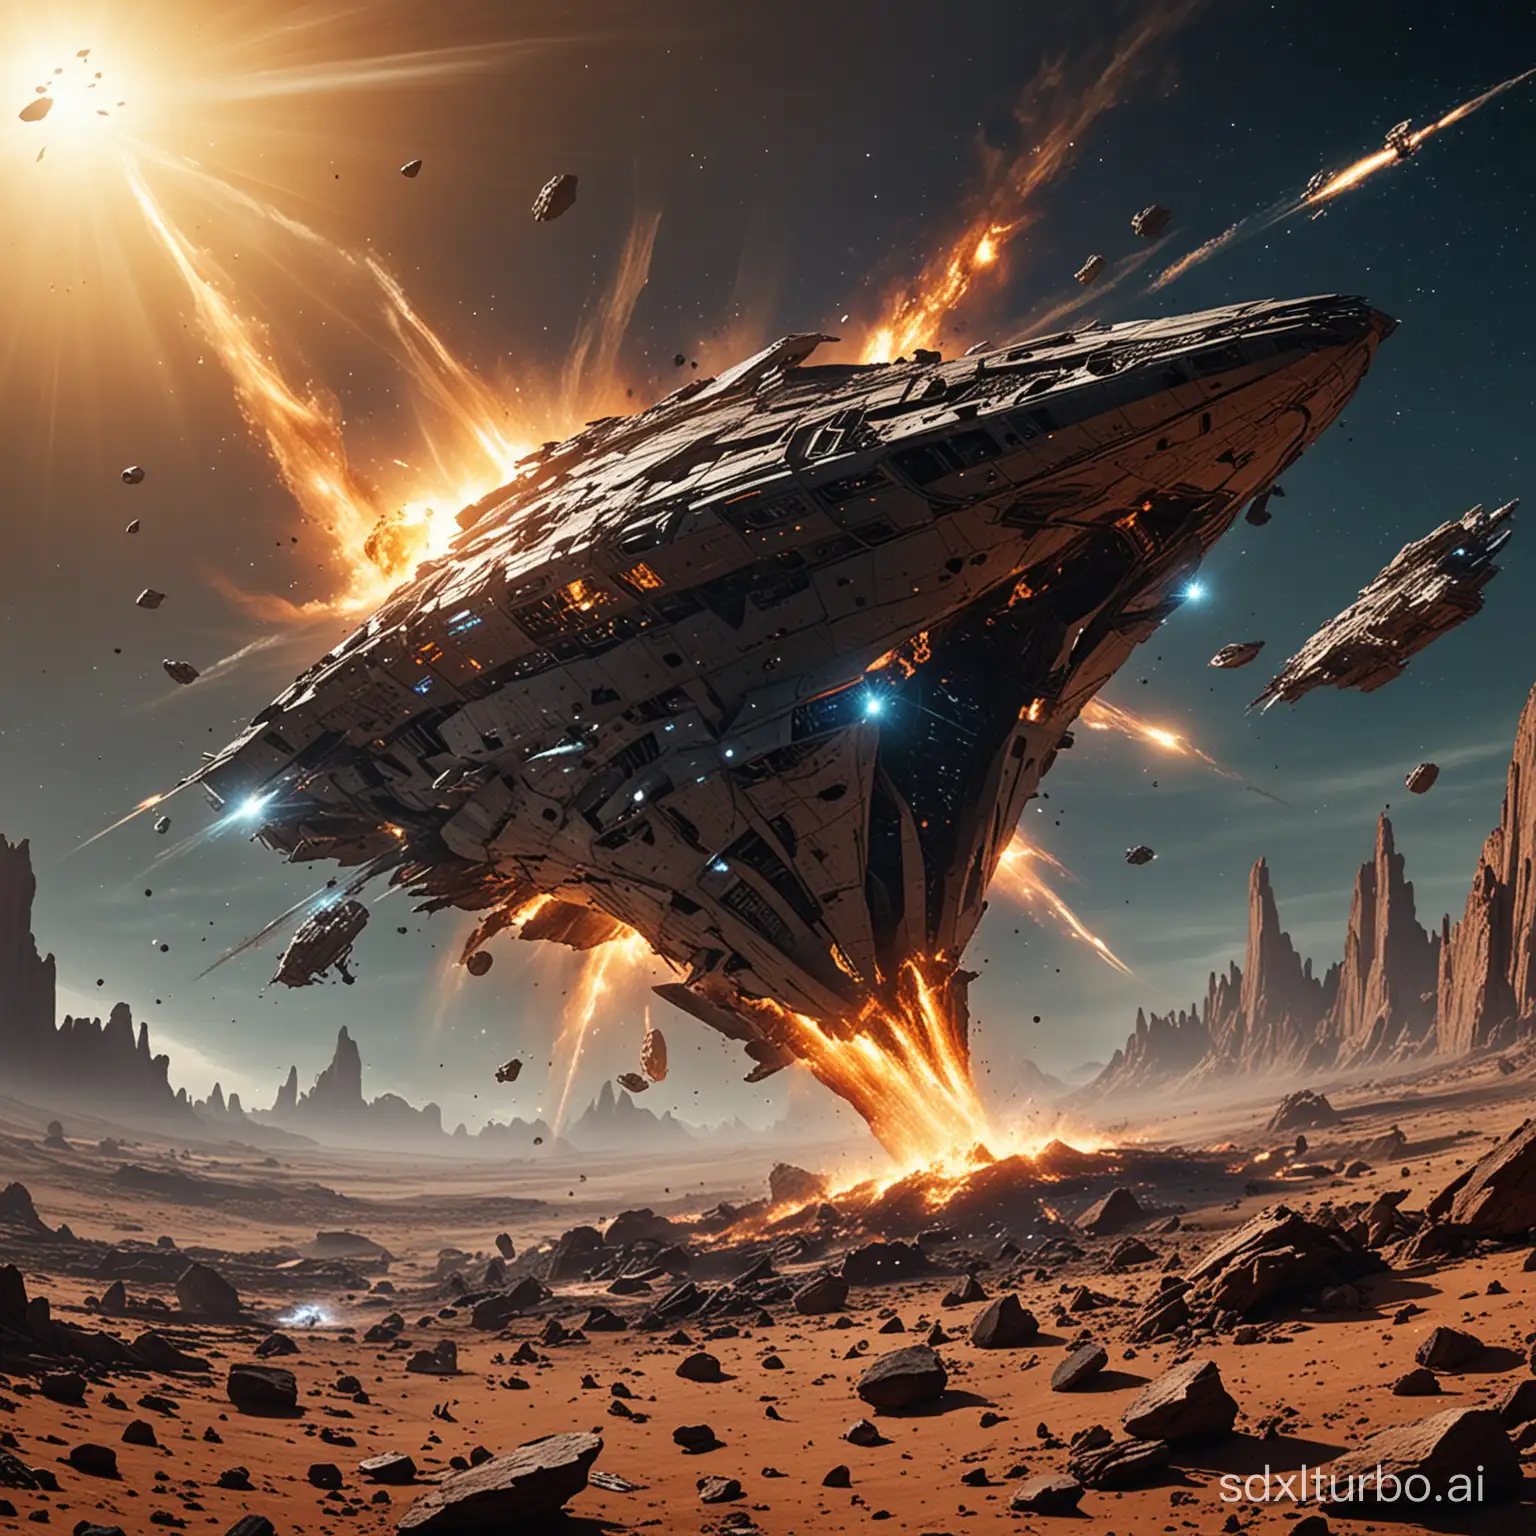 ancient alien starship debris multiple wreck parts massive destruction accident impact in sun orbit melting